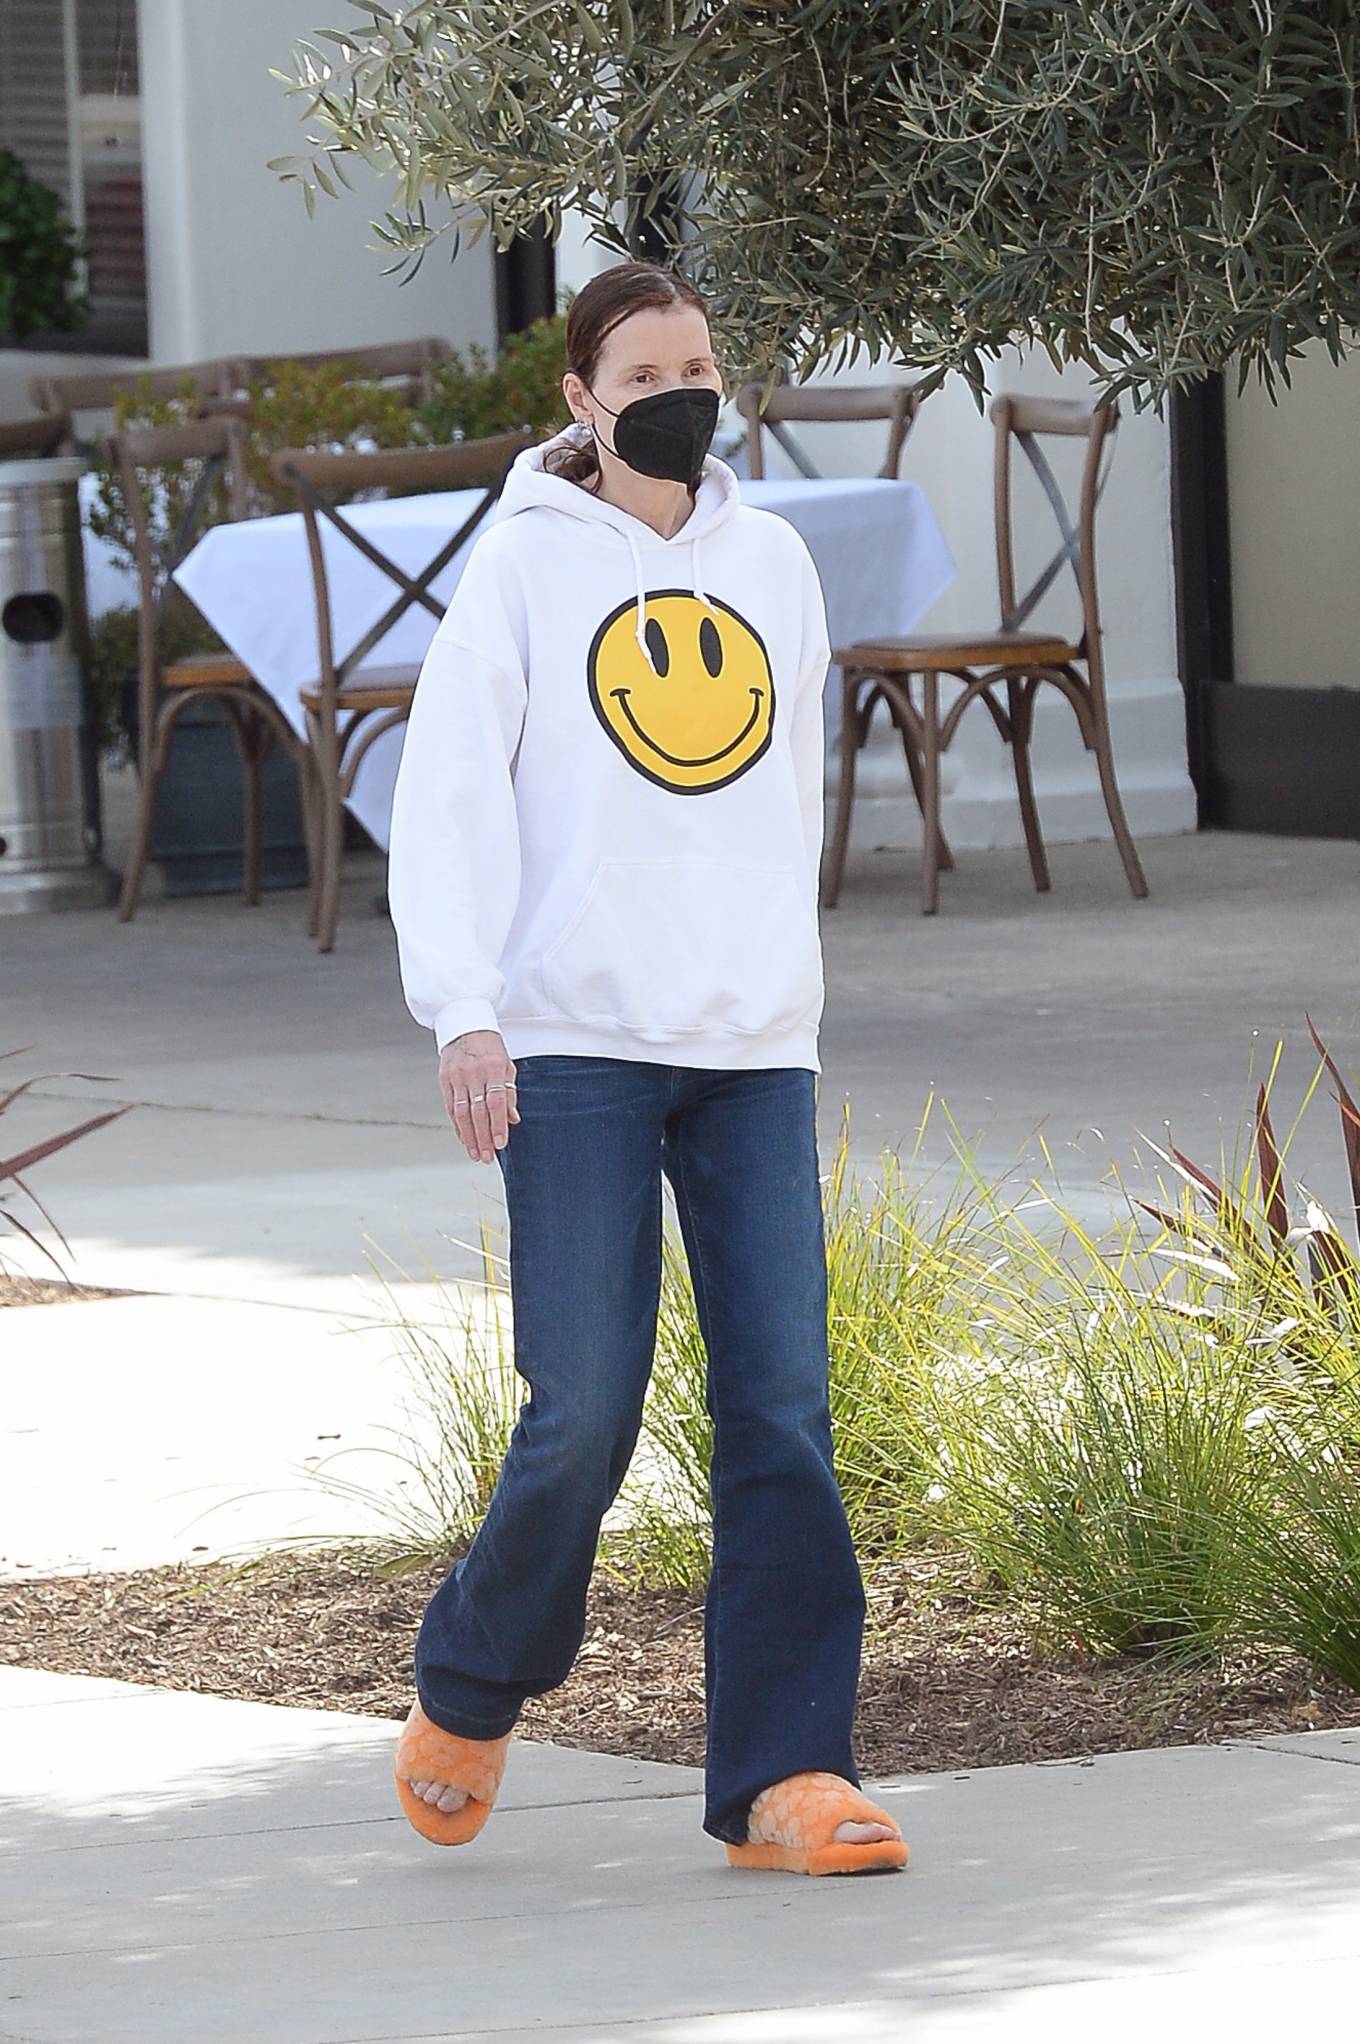 Geena Davis 2022 : Geena Davis – Run errands wearing slippers in Los Angeles-14